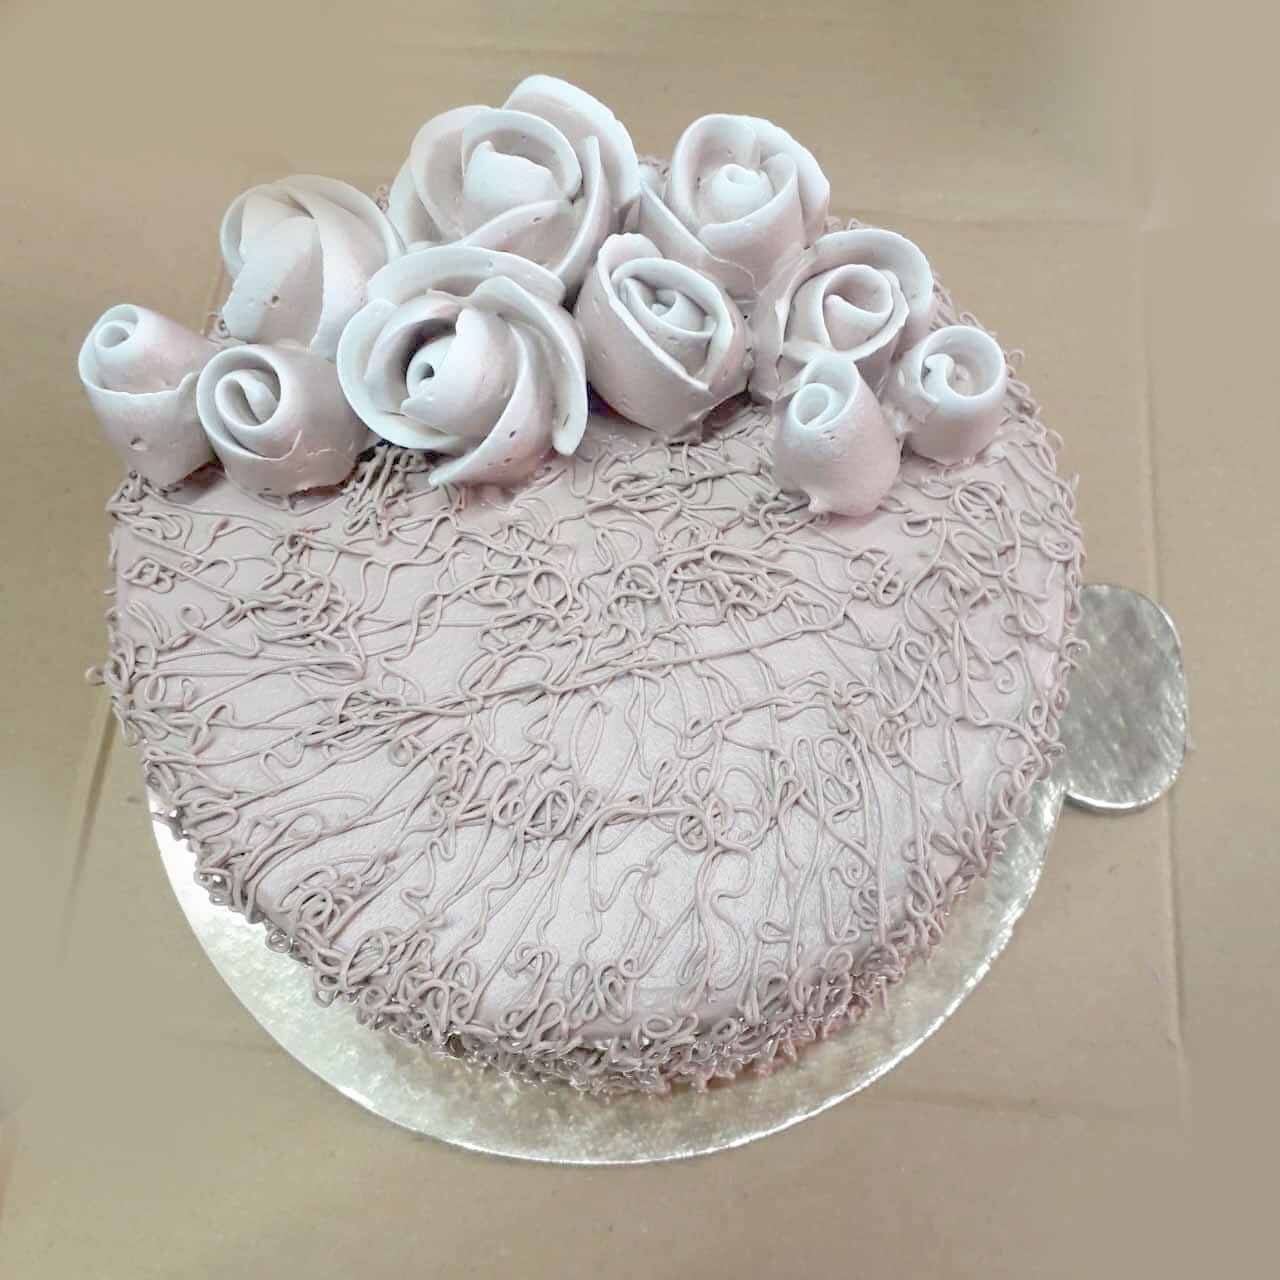 Smart car cake - Decorated Cake by Daria Albanese - CakesDecor